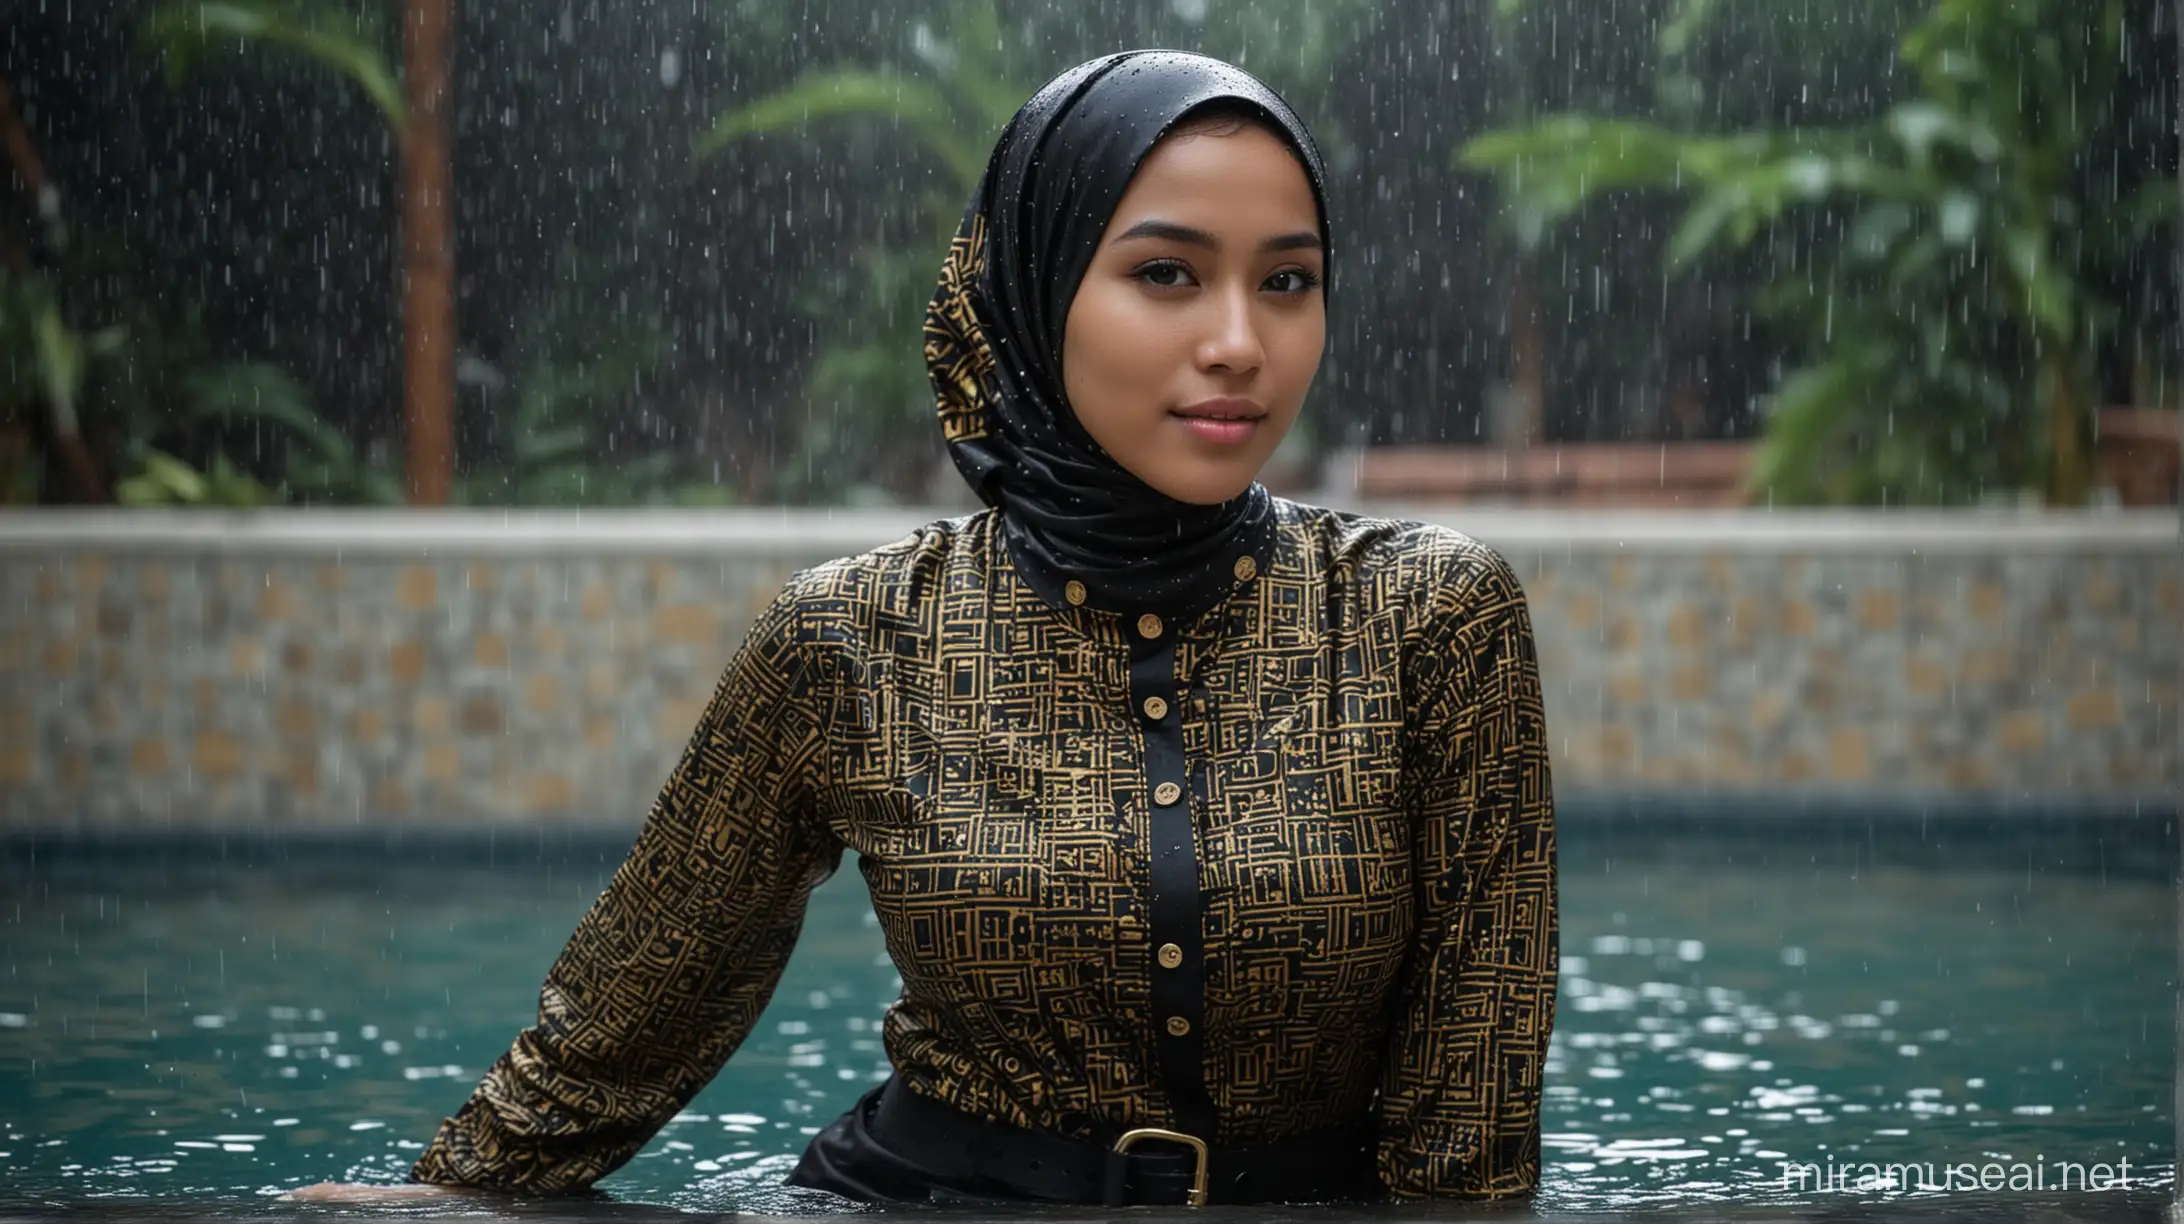 Indonesian Woman in BlackGold Geometric Print Shirt Smirking in the Rain at Night